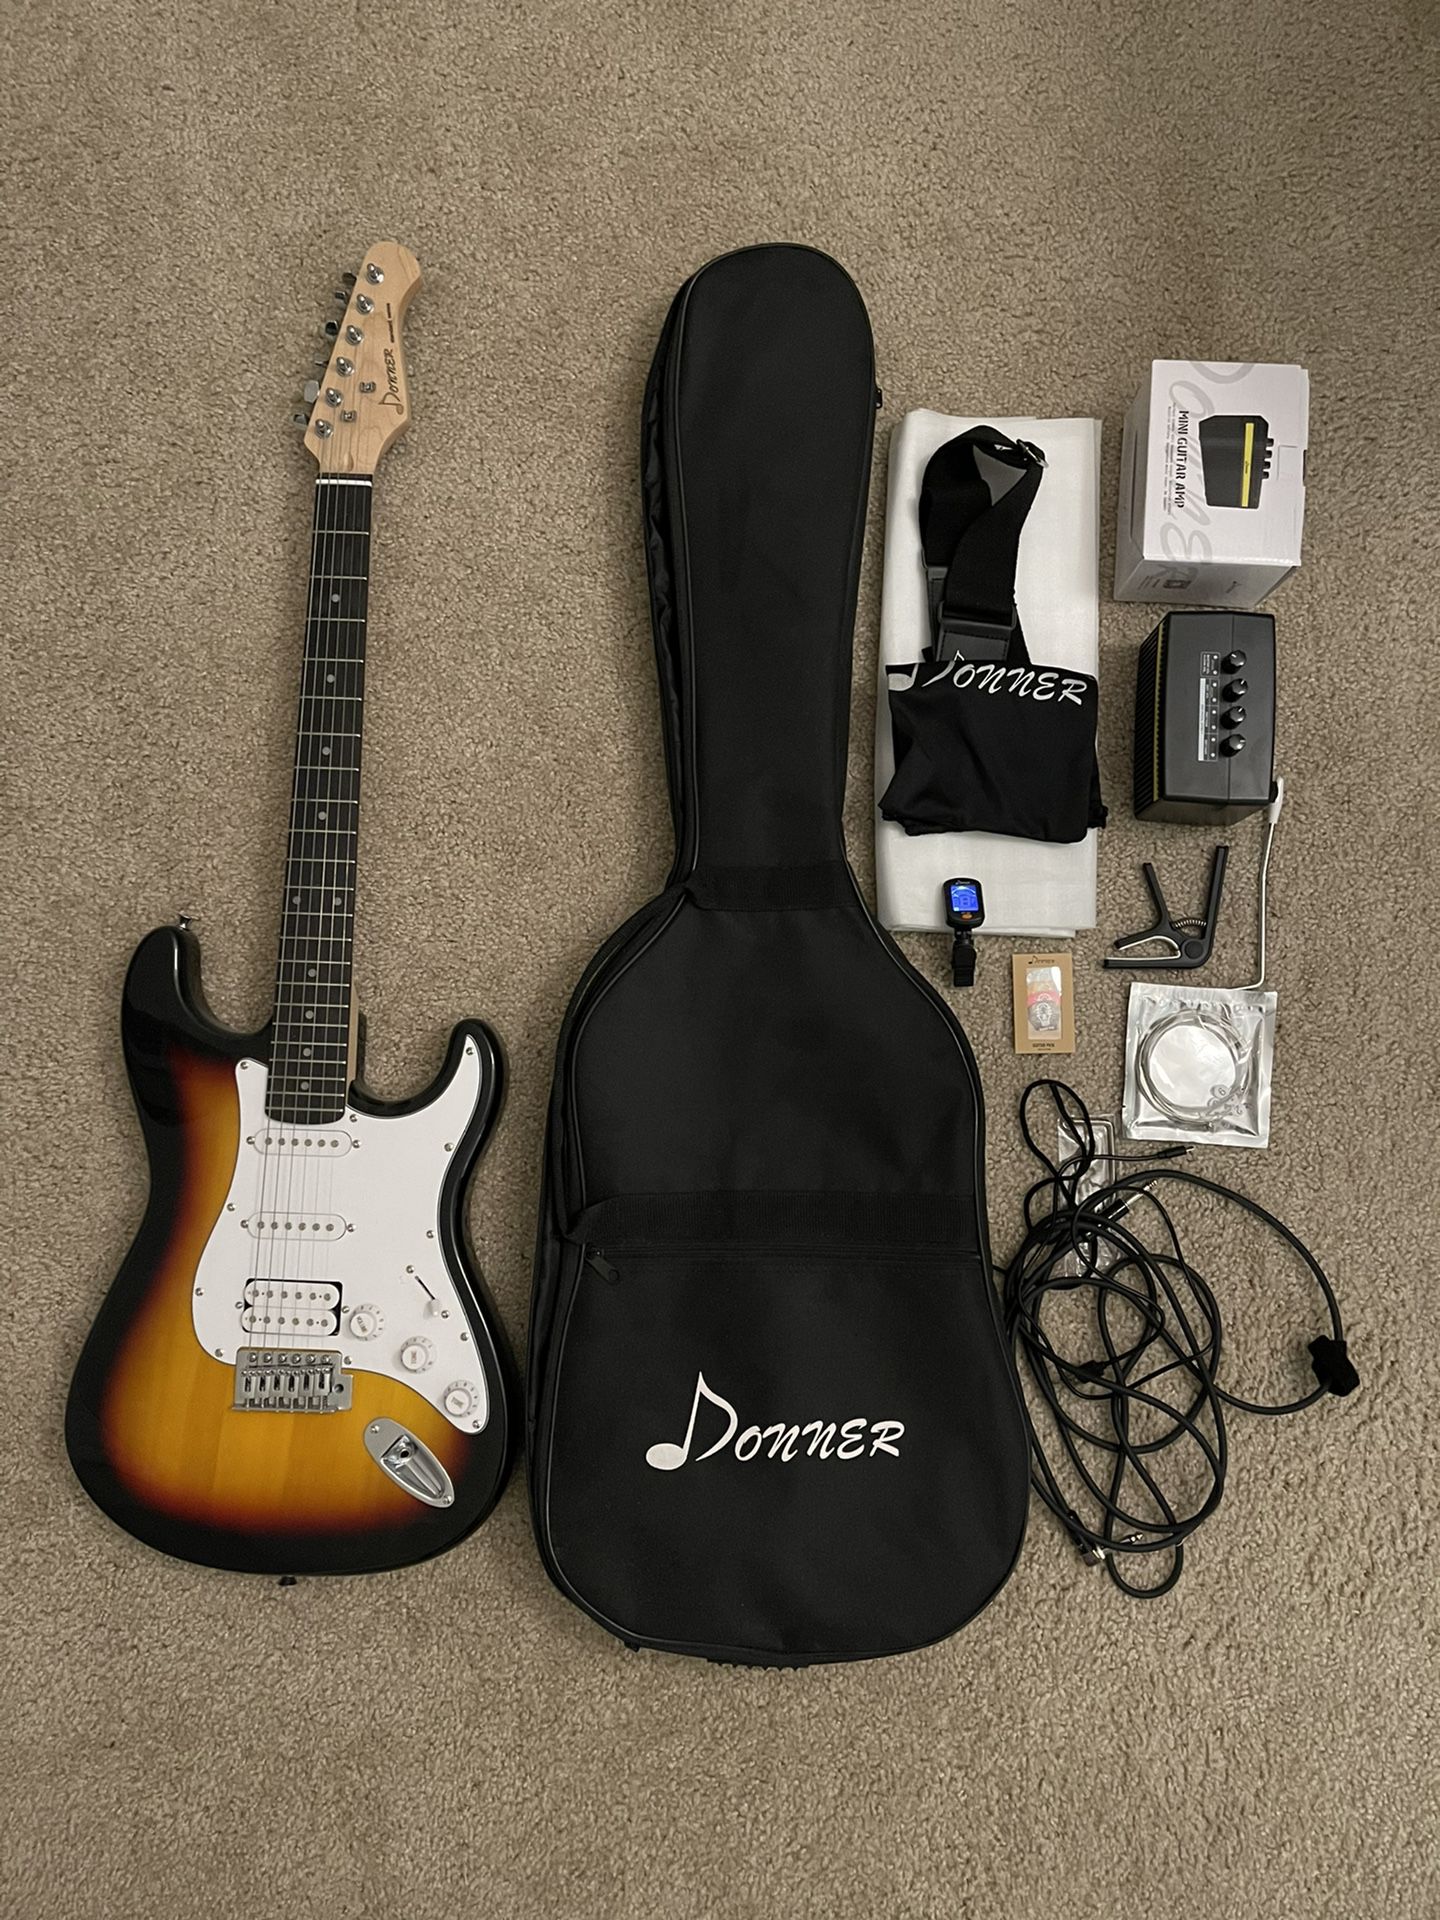 Donner 39 Inch Electric Guitar Beginner Kit Solid Body Full Size Sunburst HSS for Starter, with Amplifier, Bag, Digital Tuner, Capo, Strap, String